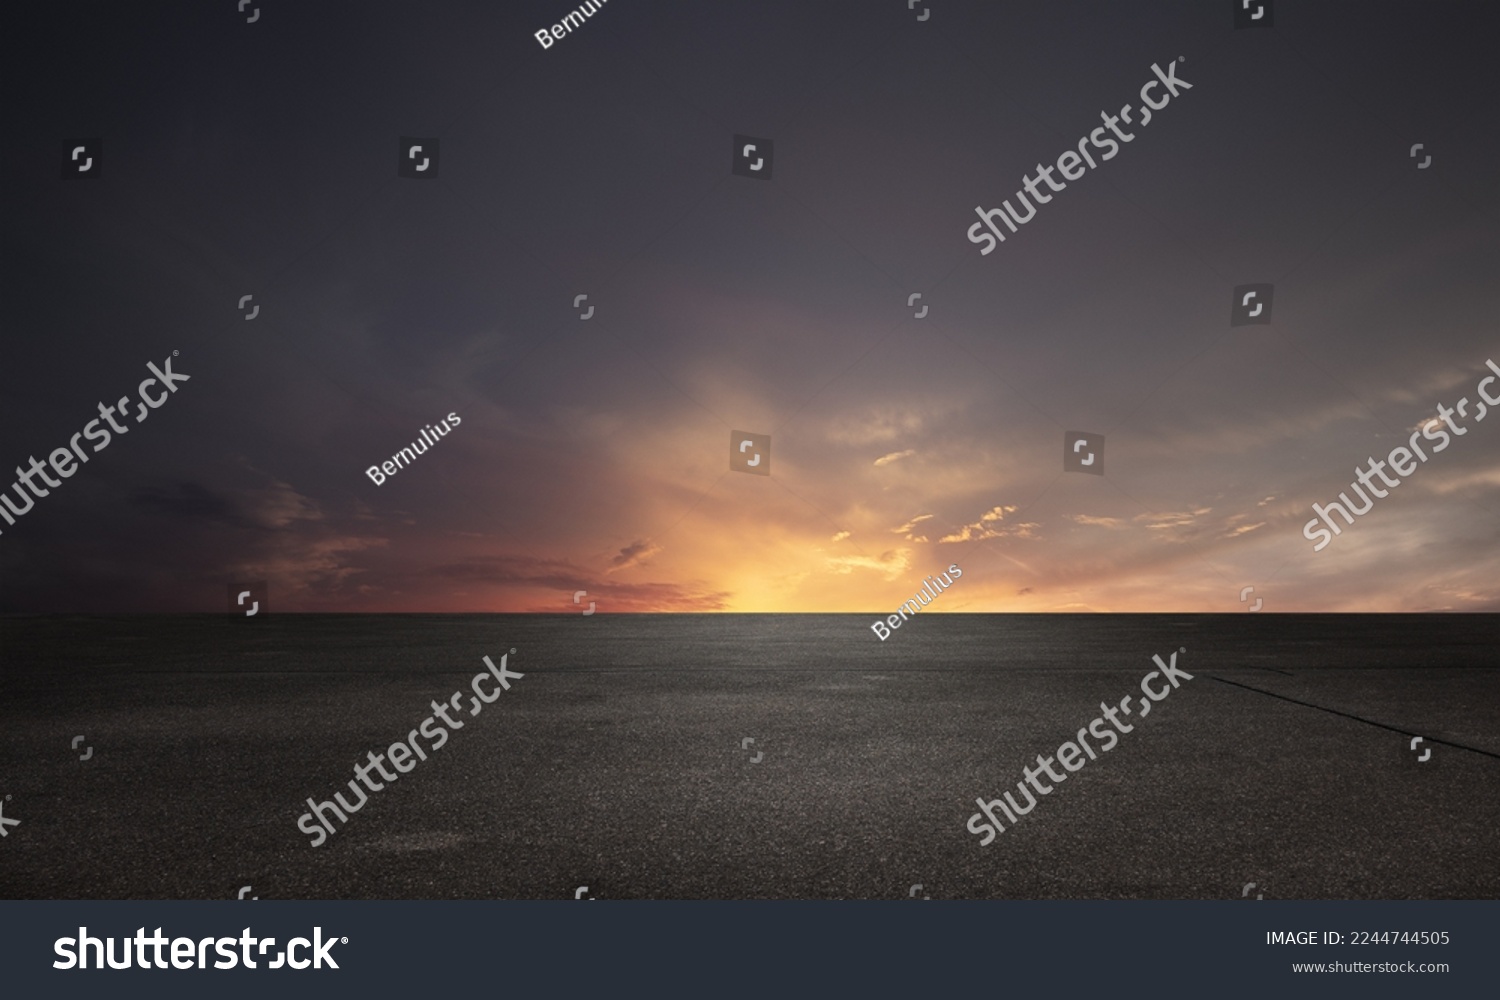 Dark Floor Background with Beautiful Sunset Cloud Night Sky Horizon #2244744505